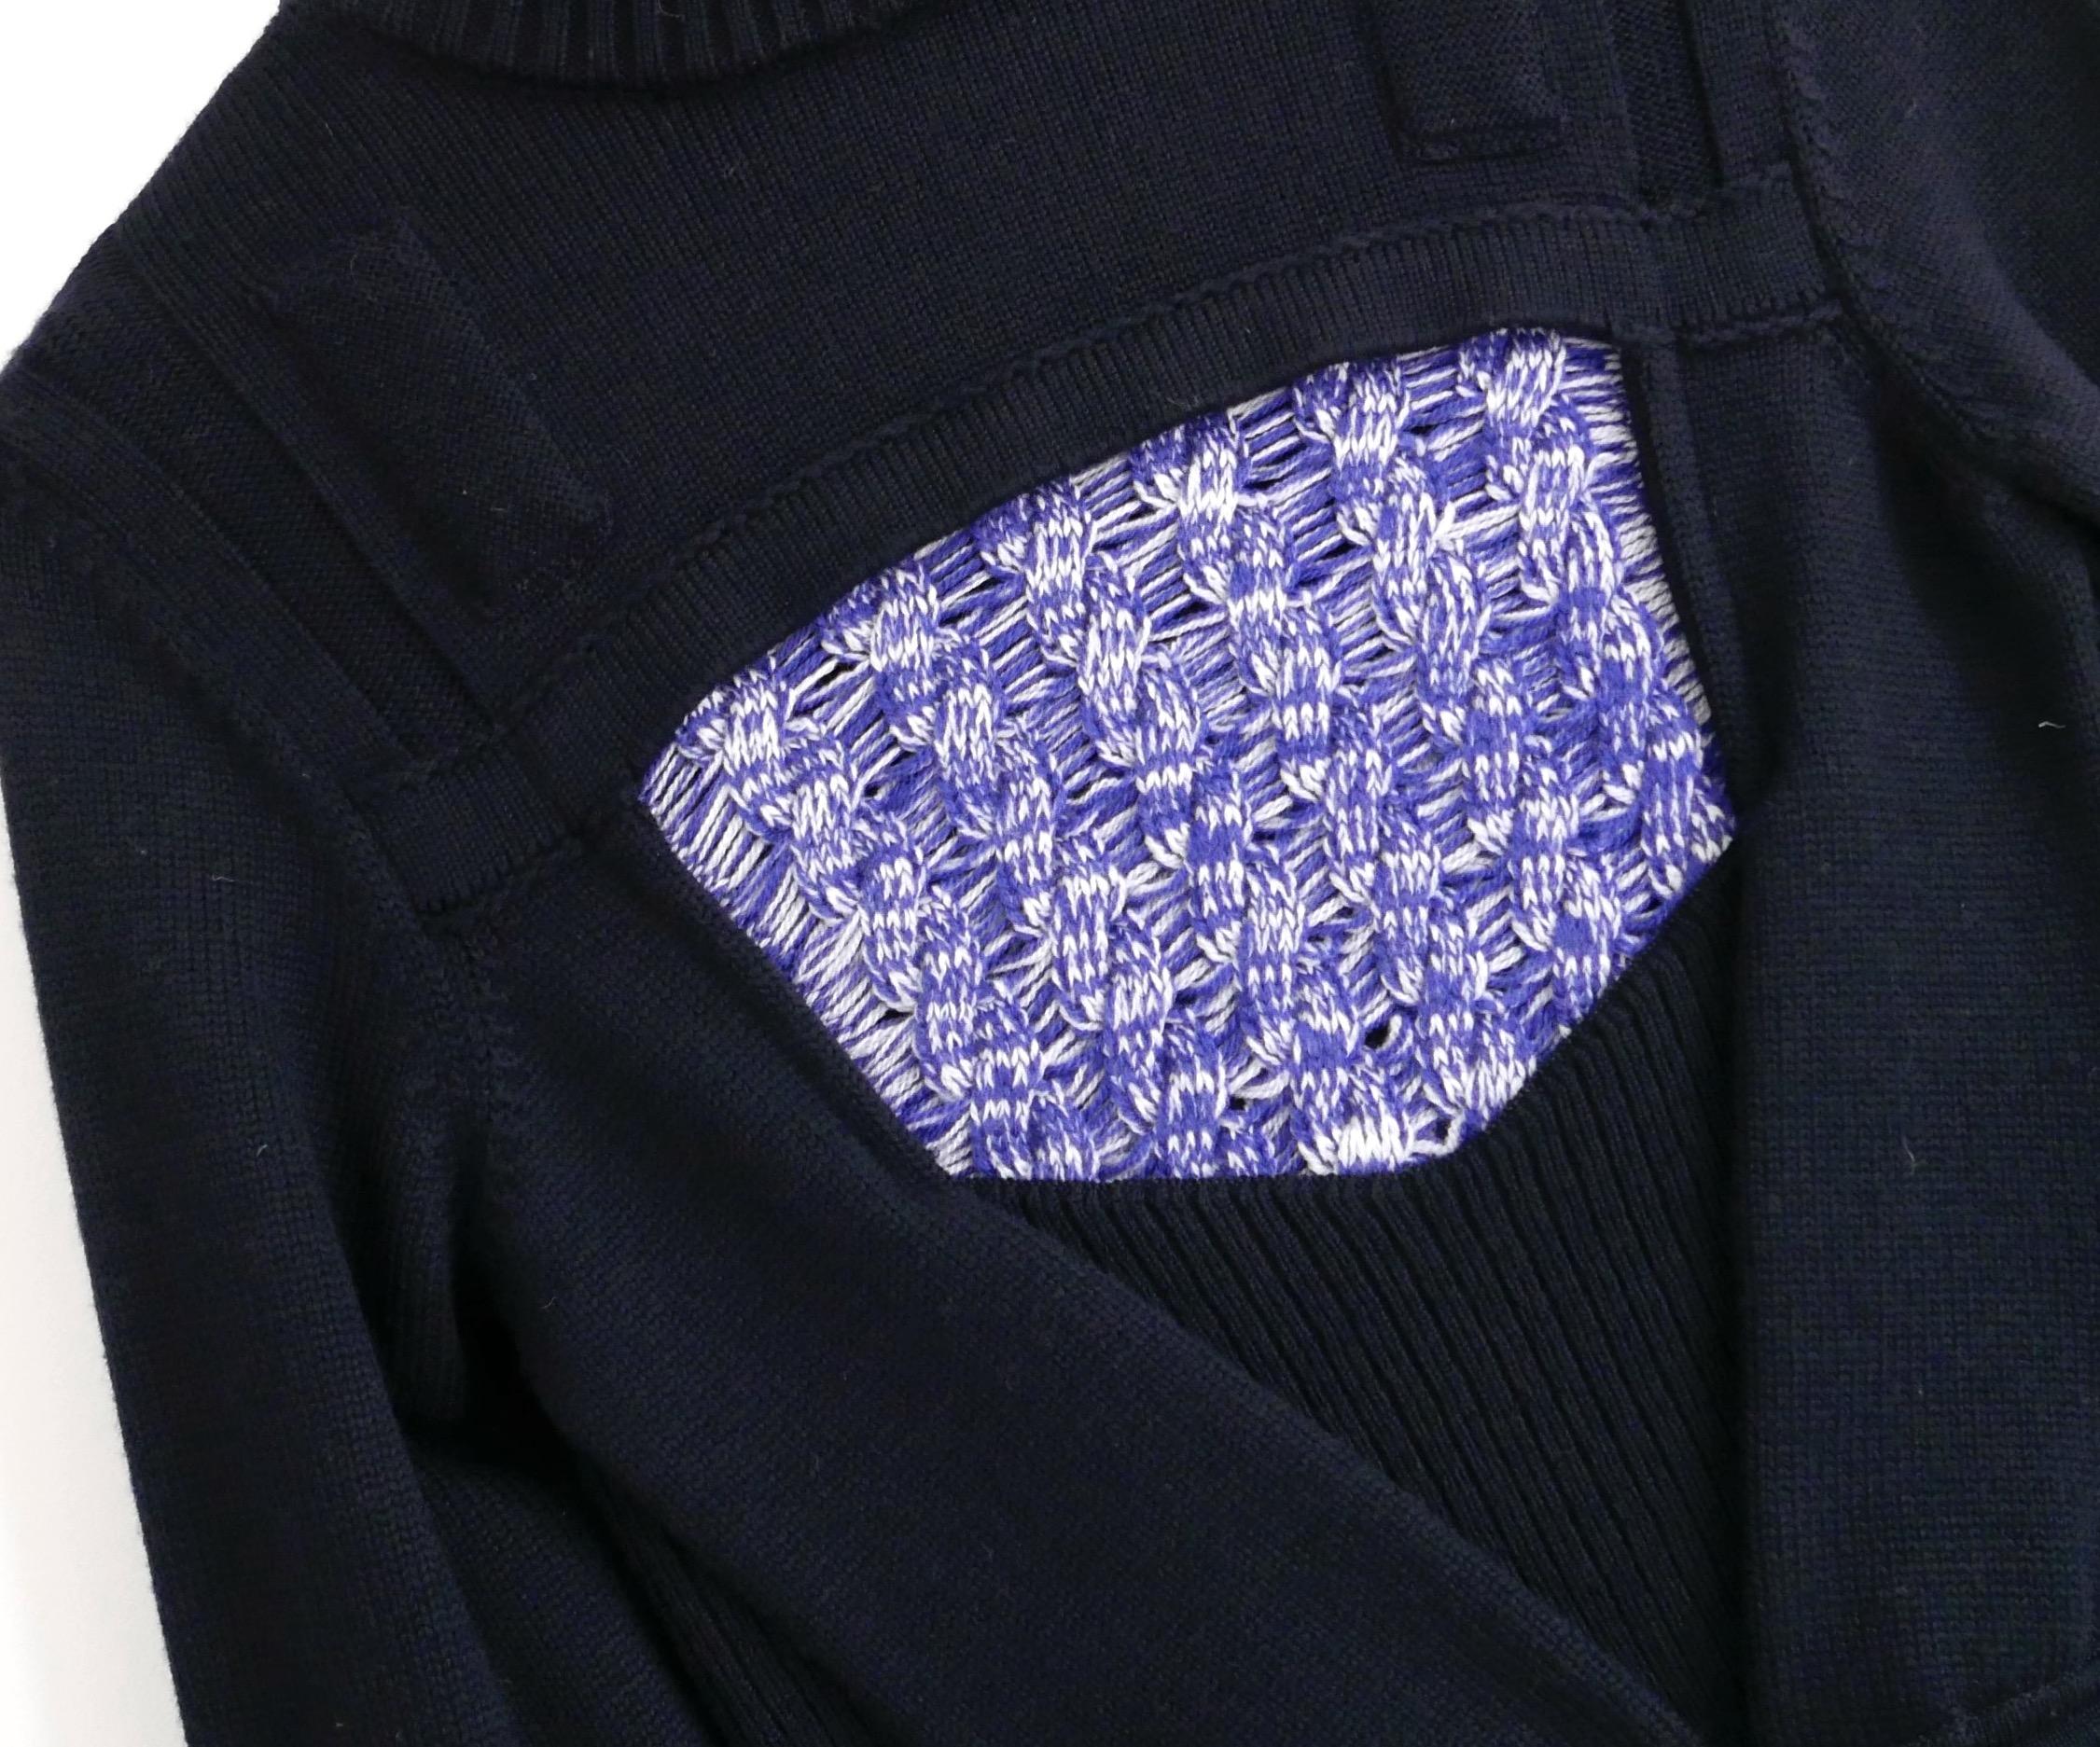 Dior x Raf Simons Pre-Fall 15 Sequin Knit Peplum Top For Sale 1